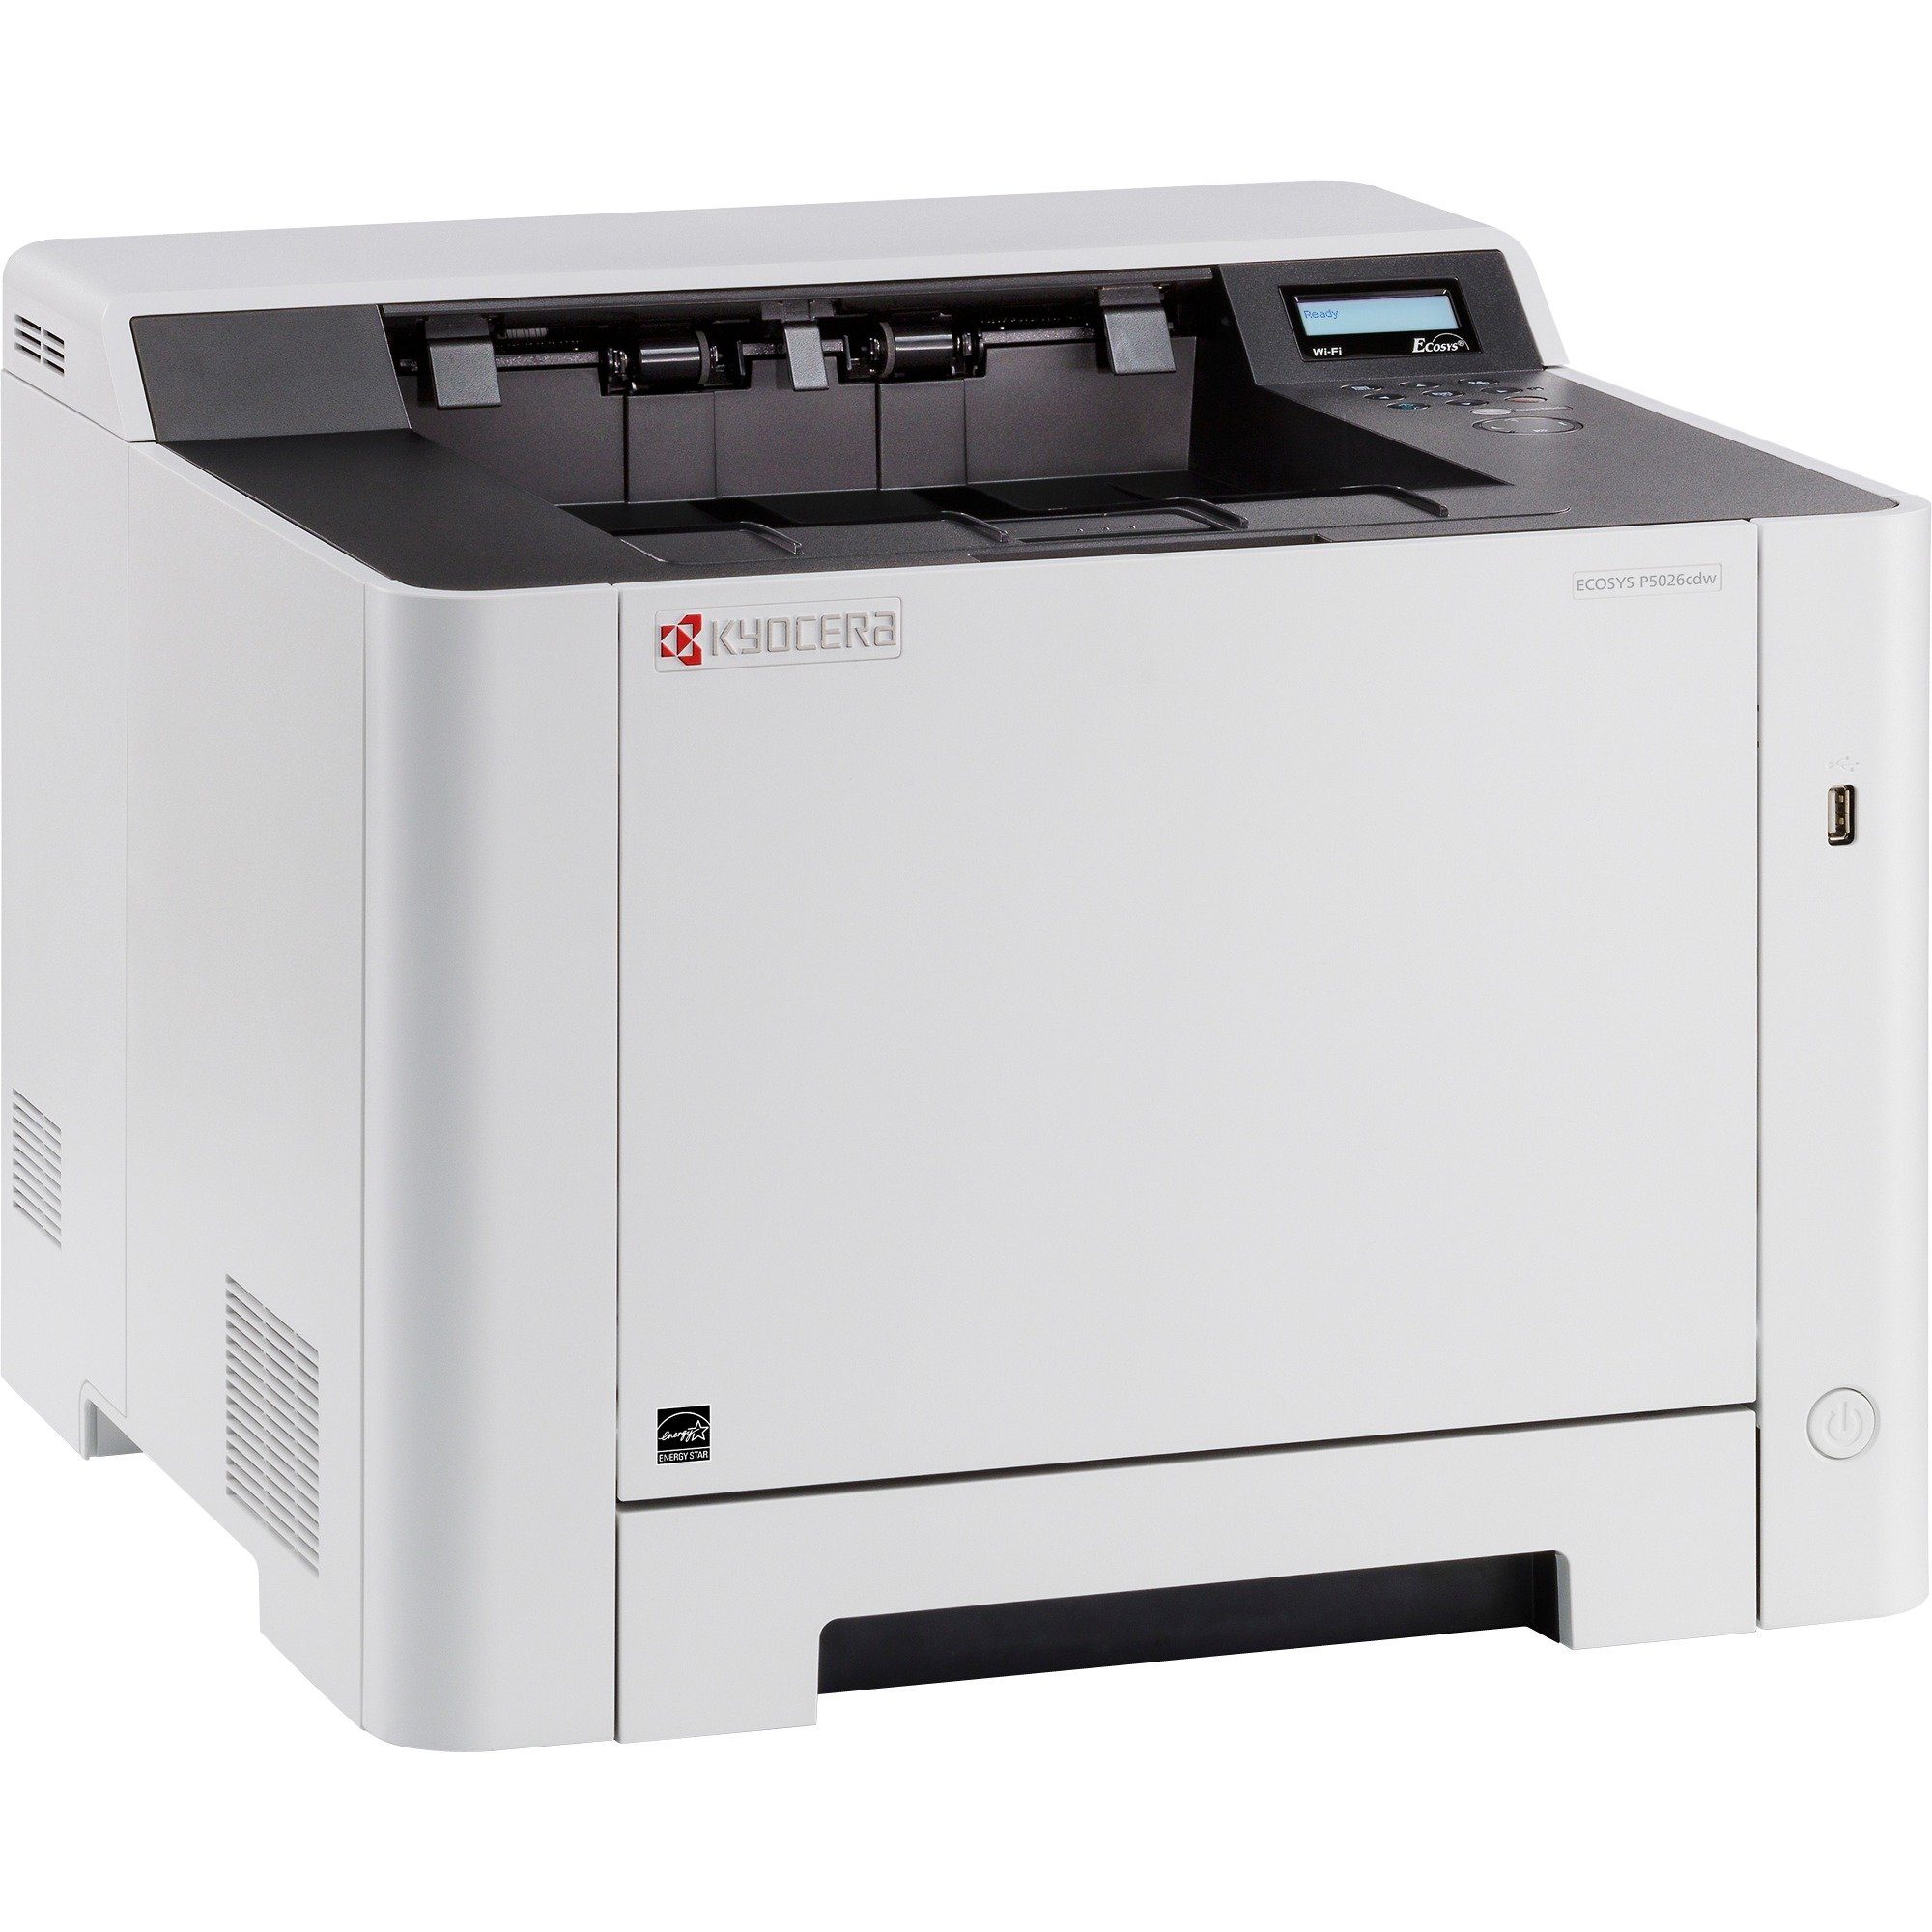 Kyocera ECOSYS P5026cdw Multifunktionsdrucker